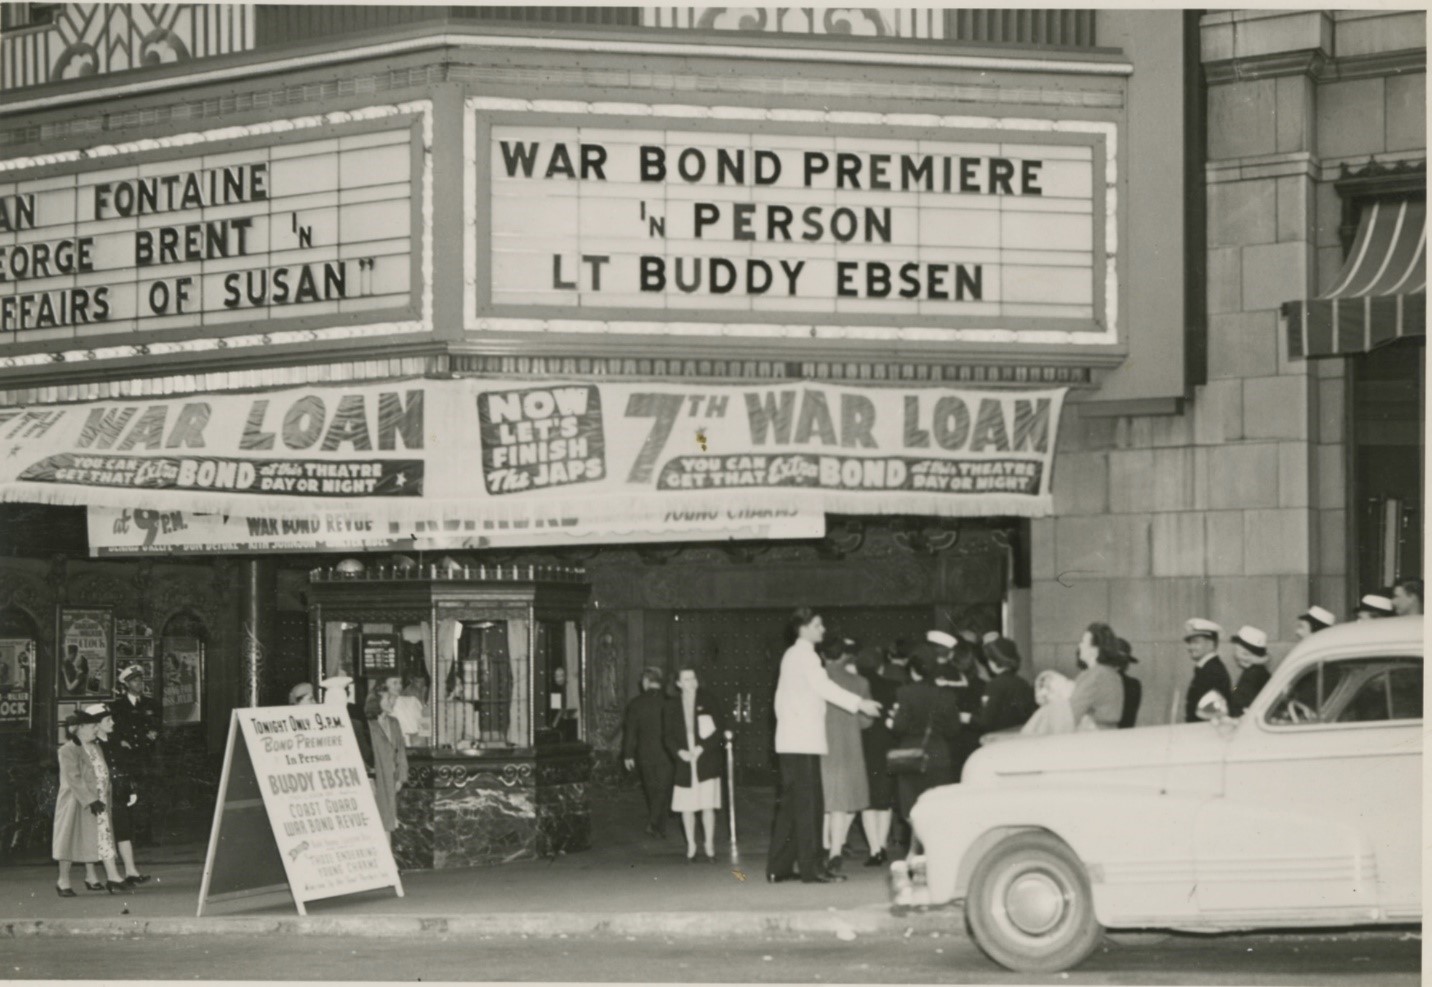 6.	Theater kiosk promoting Buddy Ebsen hosting the 7th War Loan bond drive in Seattle. (U.S. Coast Guard)